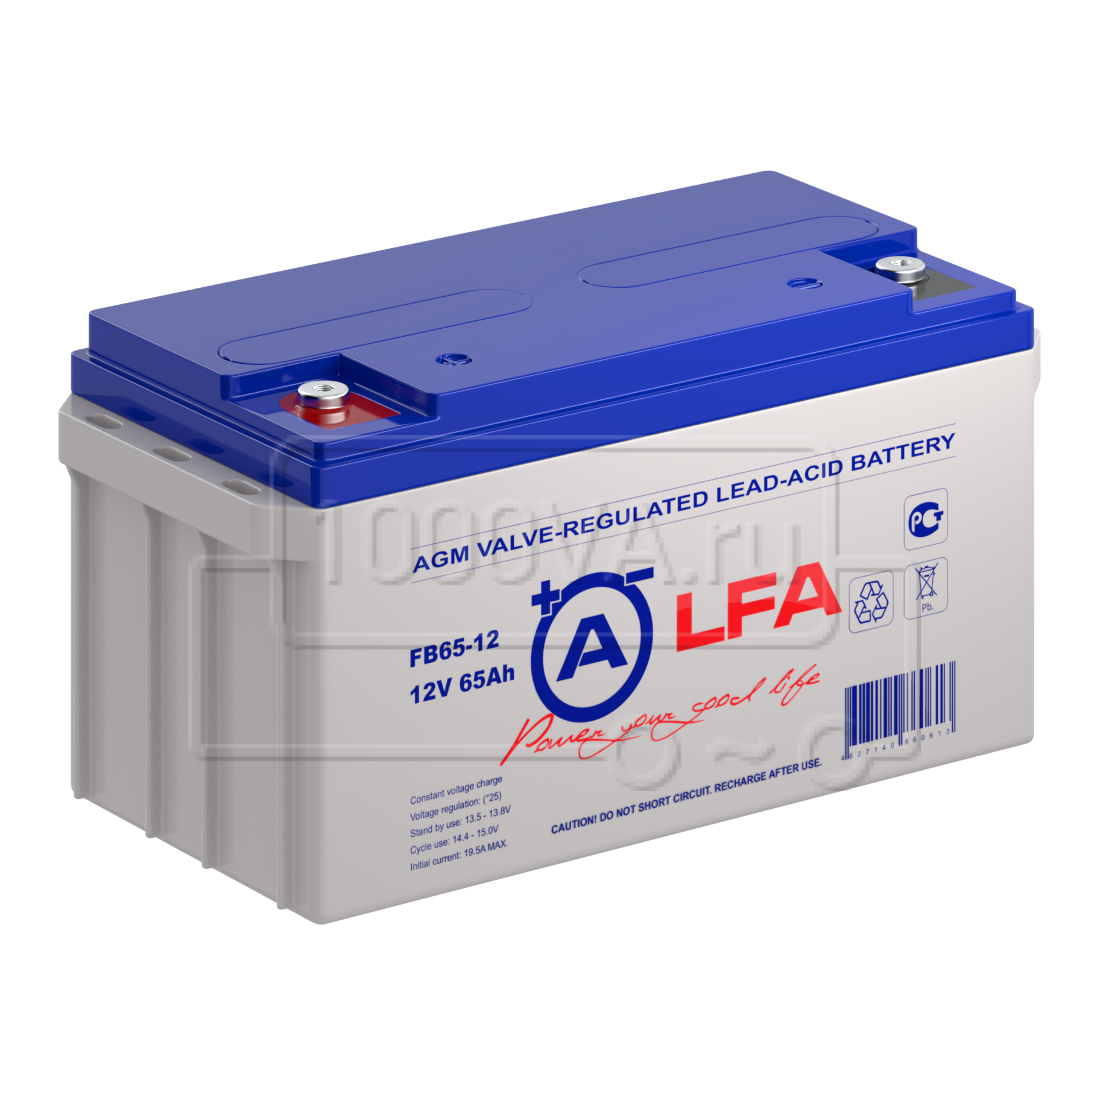 LFA Battery FB 65-12